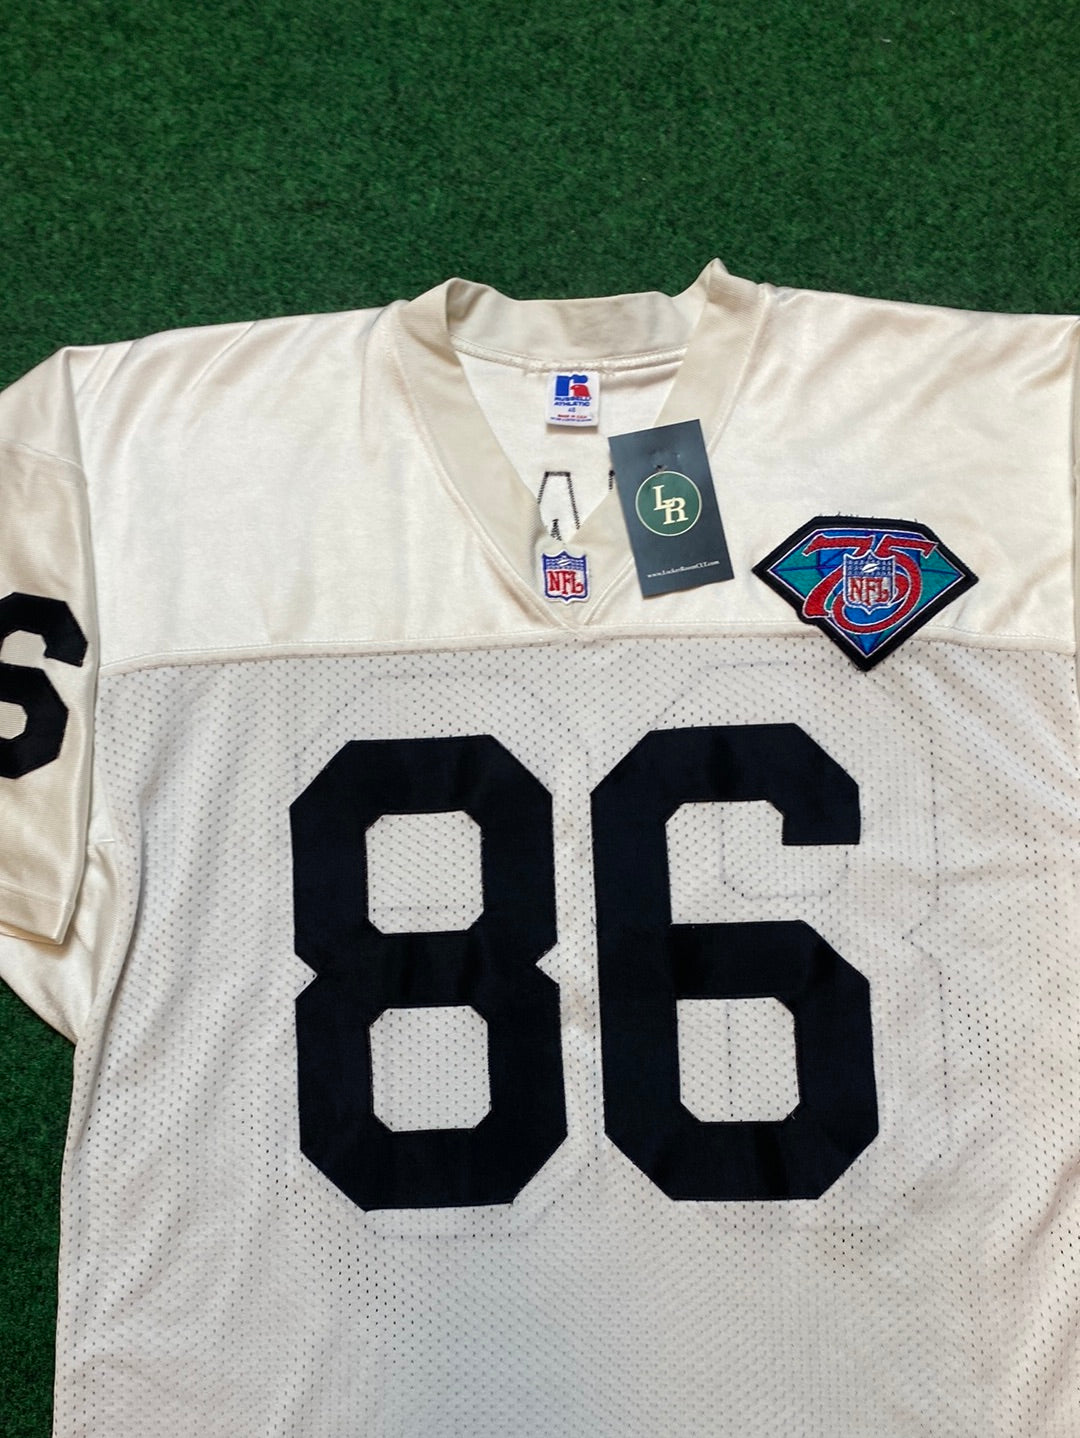 1994 Oakland Raiders Rocket Ismail NFL 75th Anniversary Jersey (48/XL)